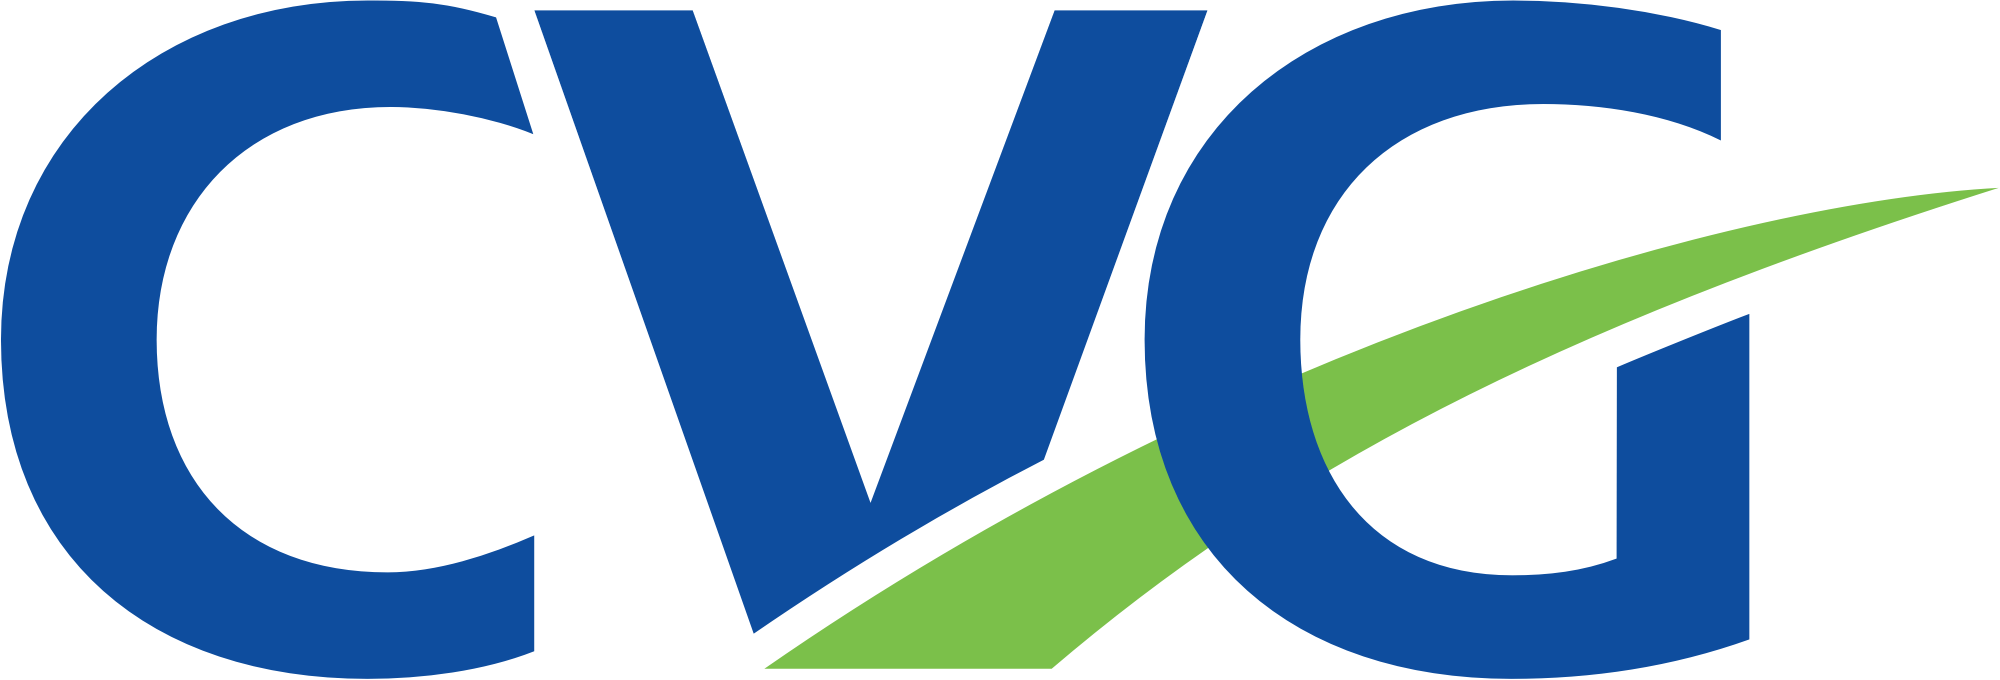 CVG Logo - Terminal Maps